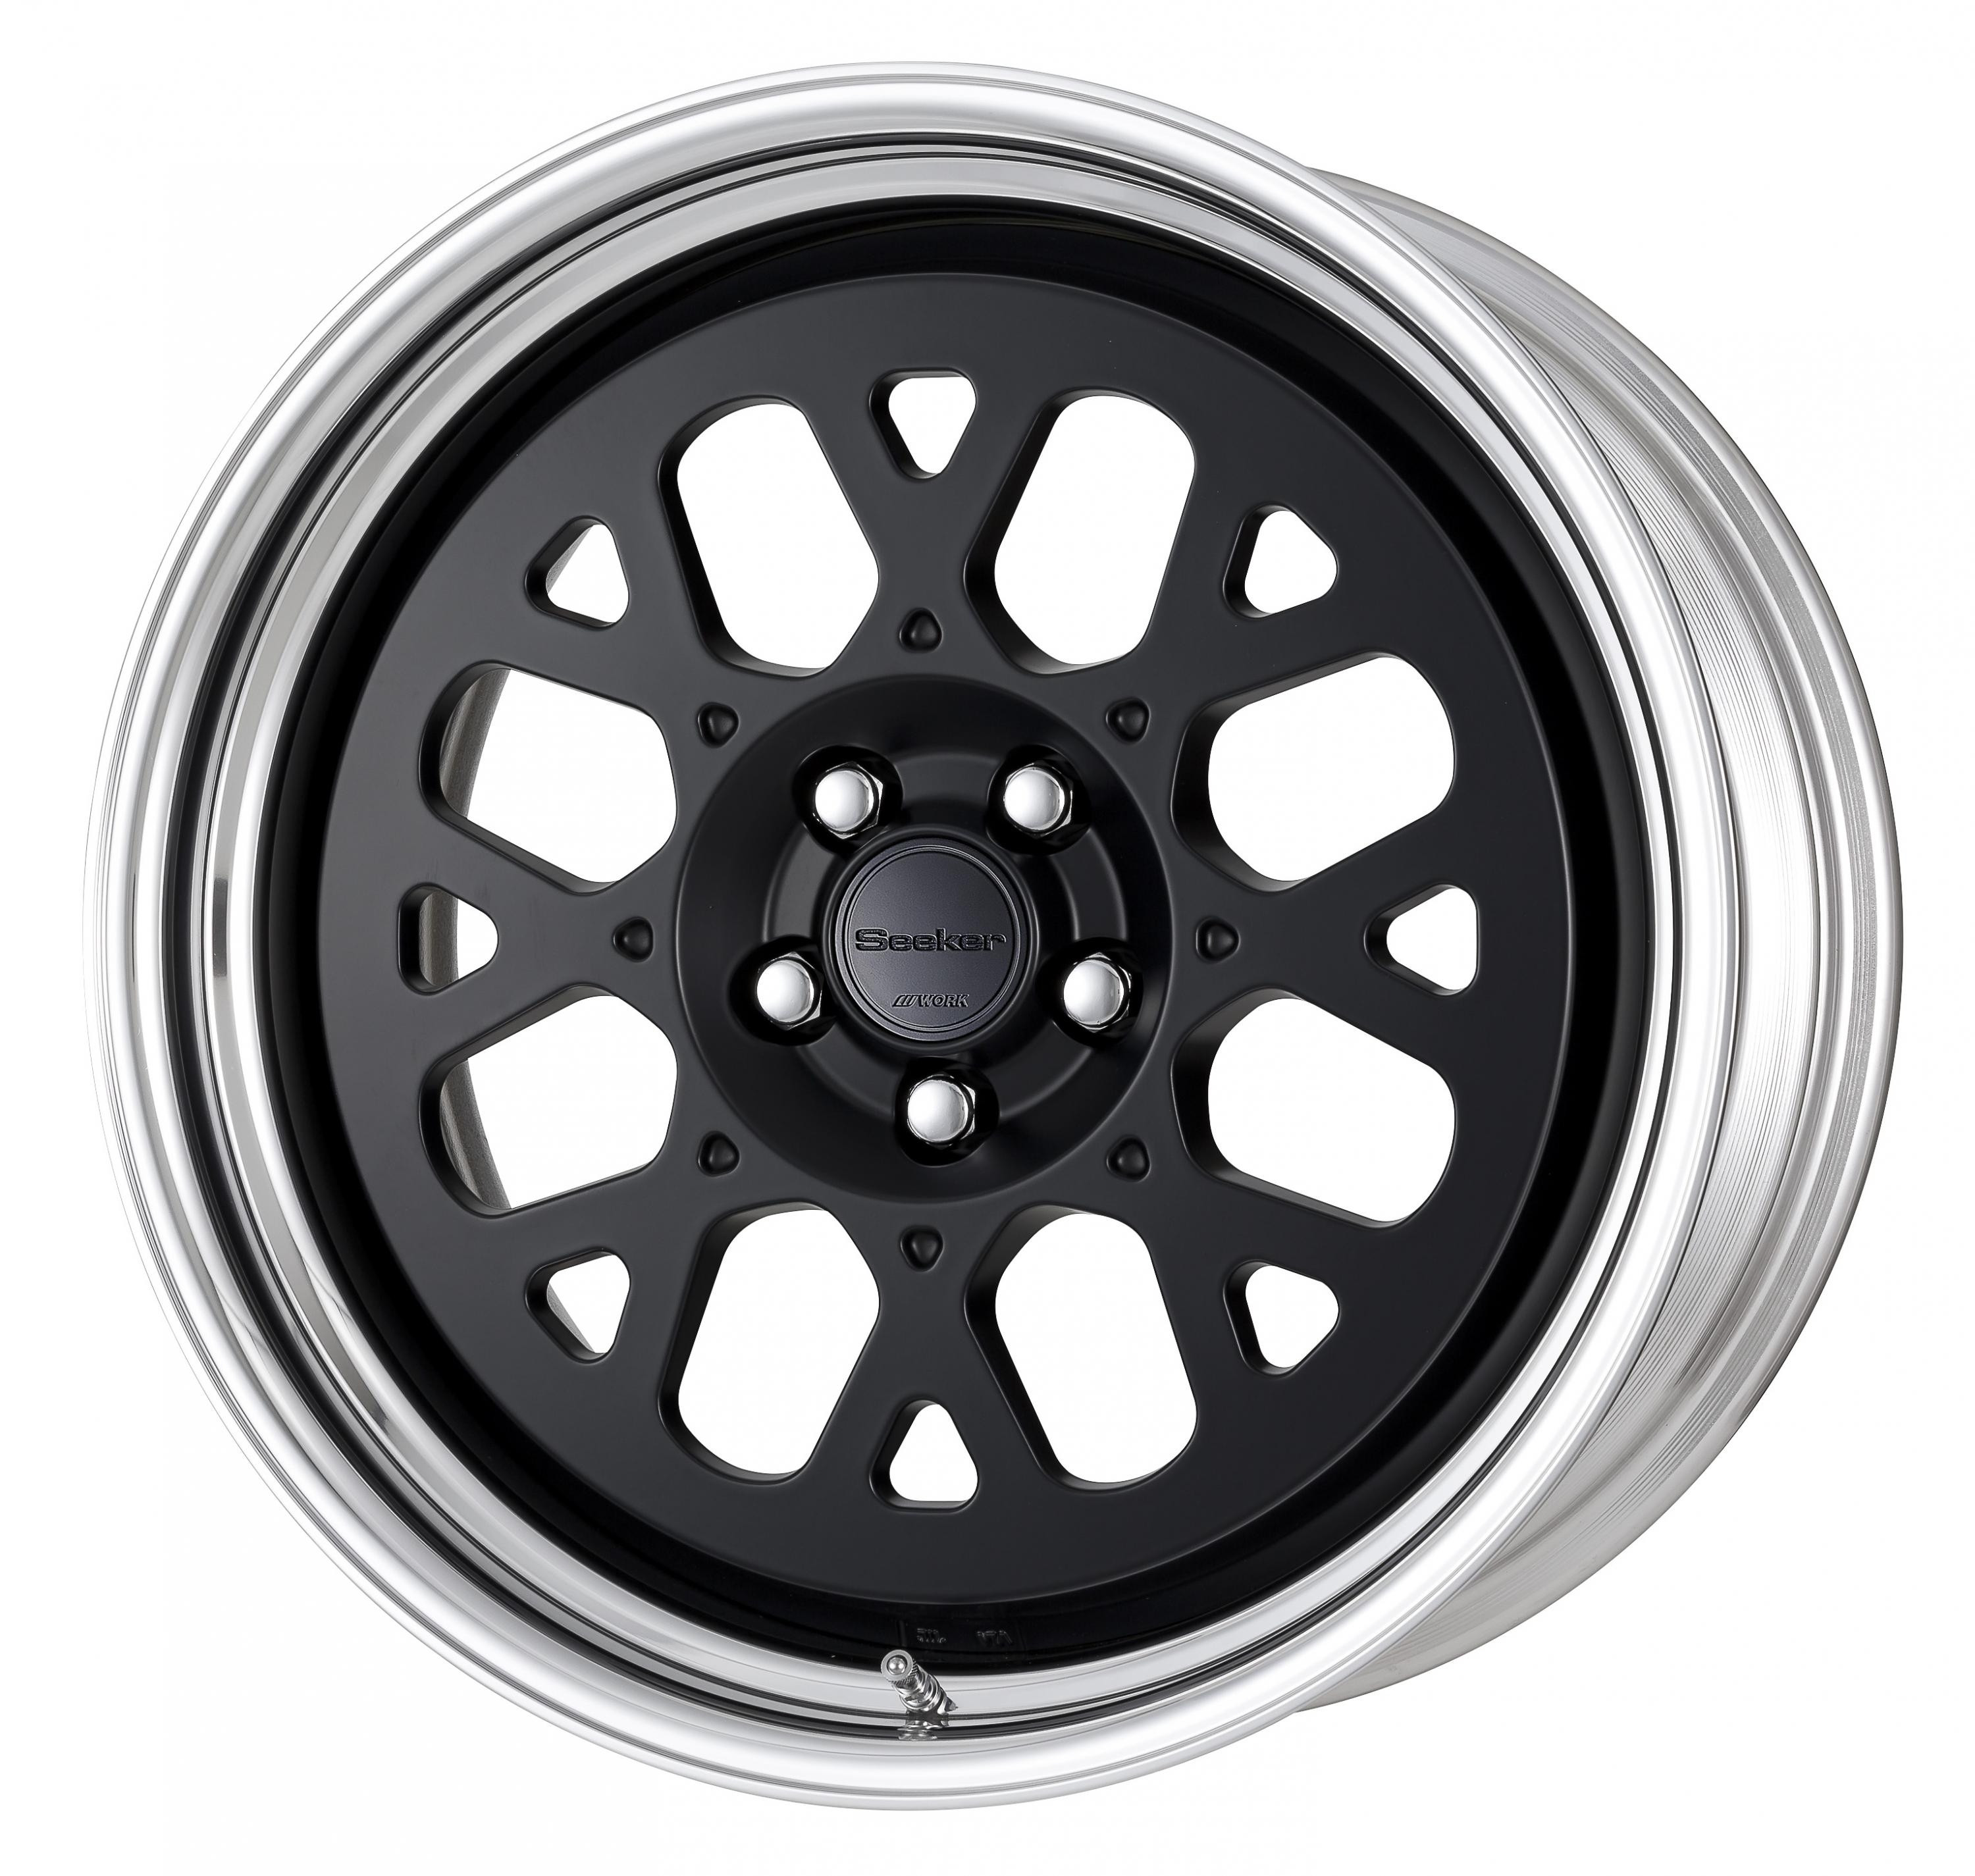 Work Seeker GX 16” Wheel For Mazda Miata MX5 | REV9